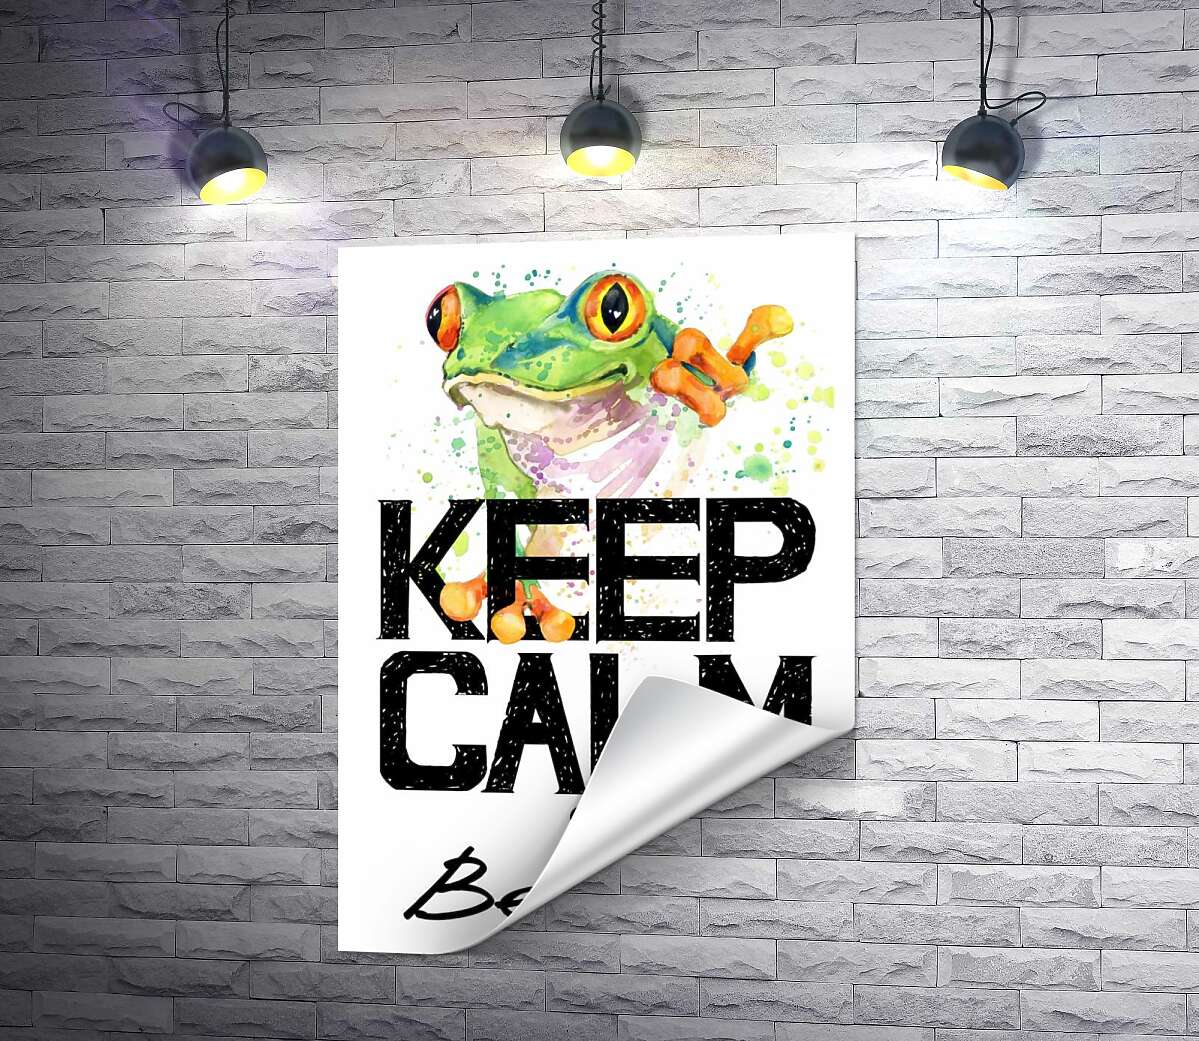 друк Деревна жаба за написом "keep calm and be cool"